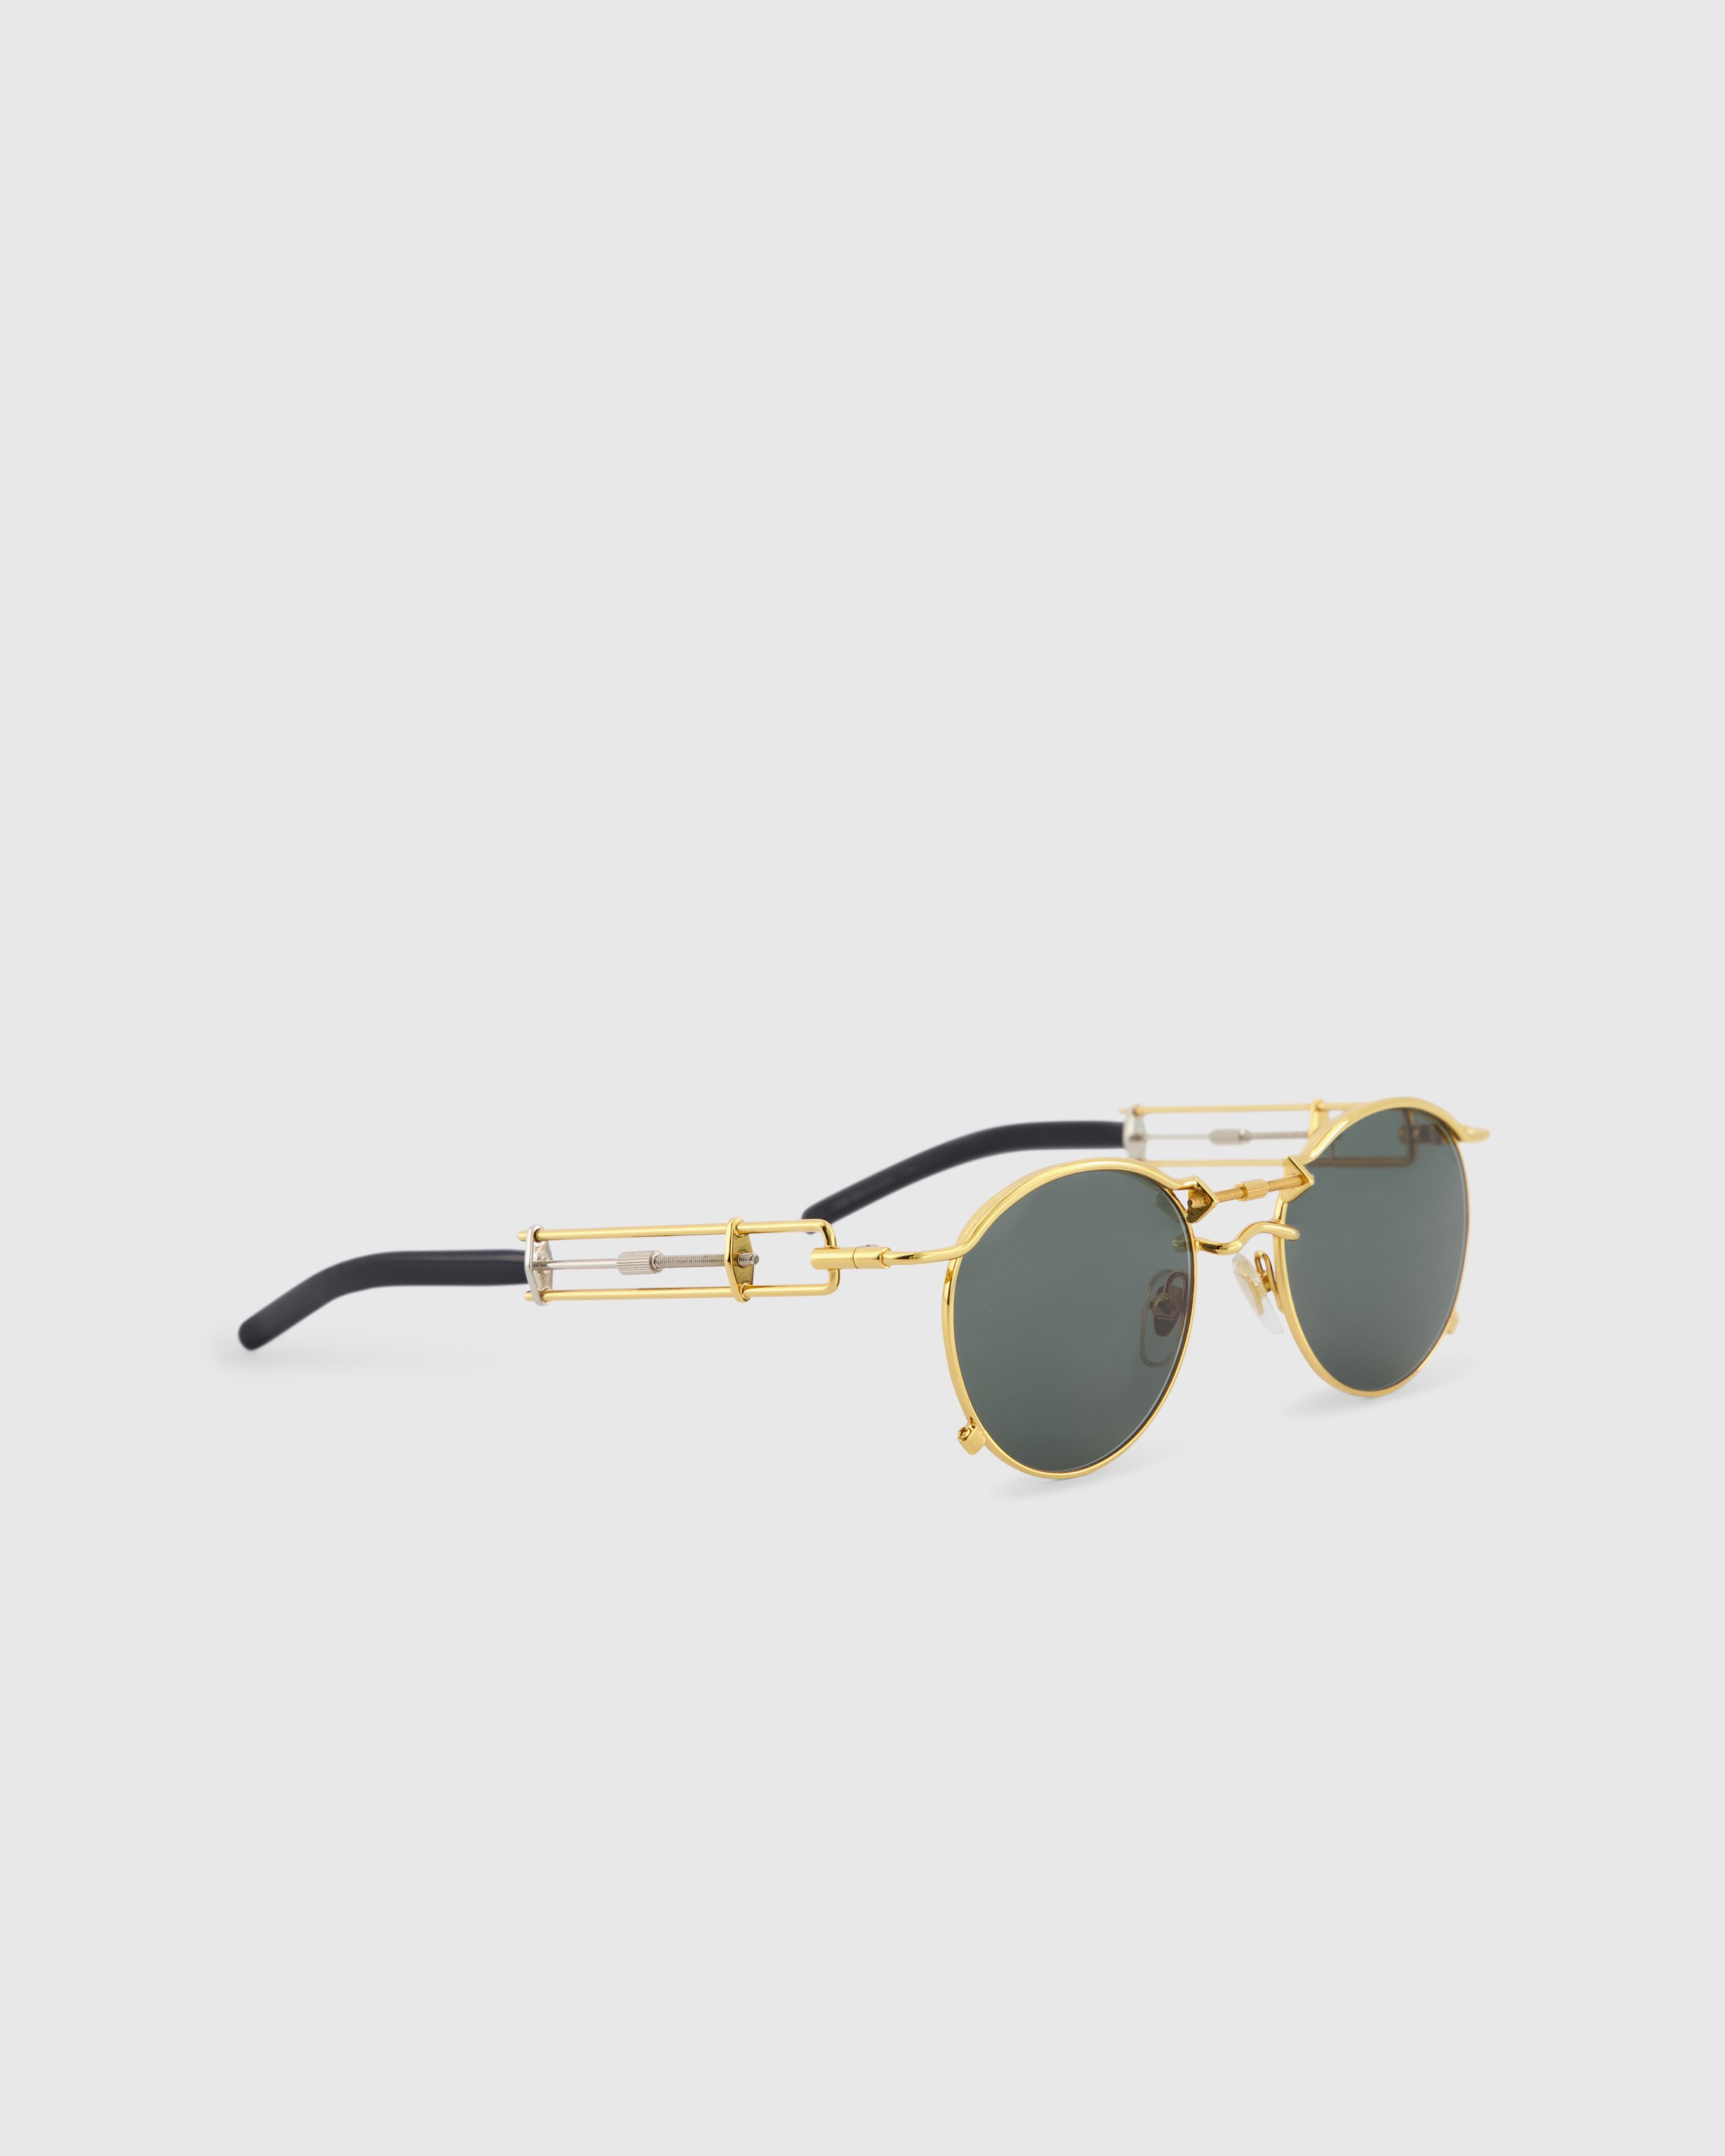 Jean Paul Gaultier x Burna Boy - 56-0174 Pas De Vis Sunglasses Yellow - Accessories - Yellow - Image 2